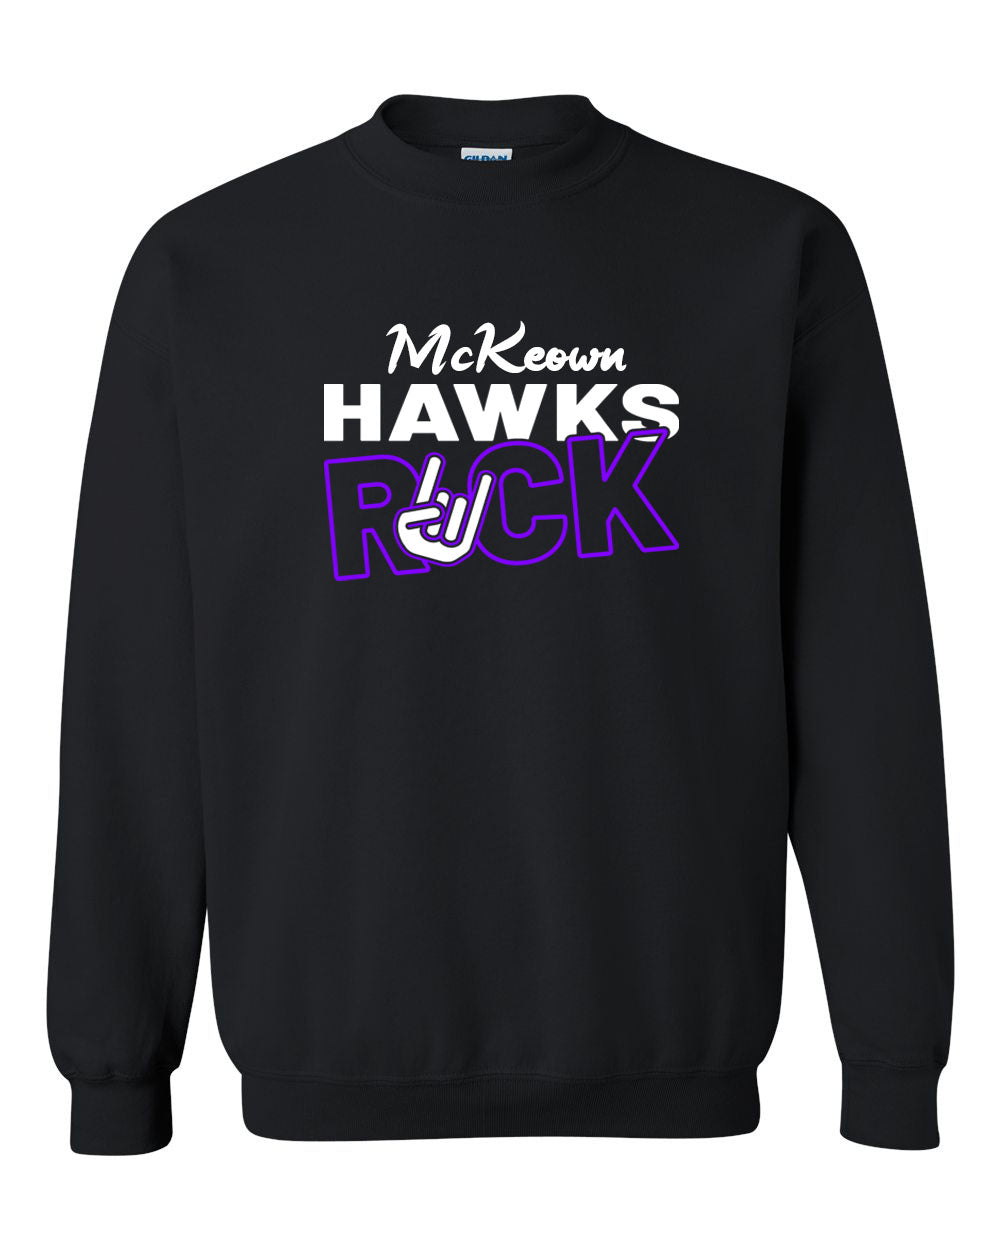 McKeown Hawks Rock non hooded sweatshirt